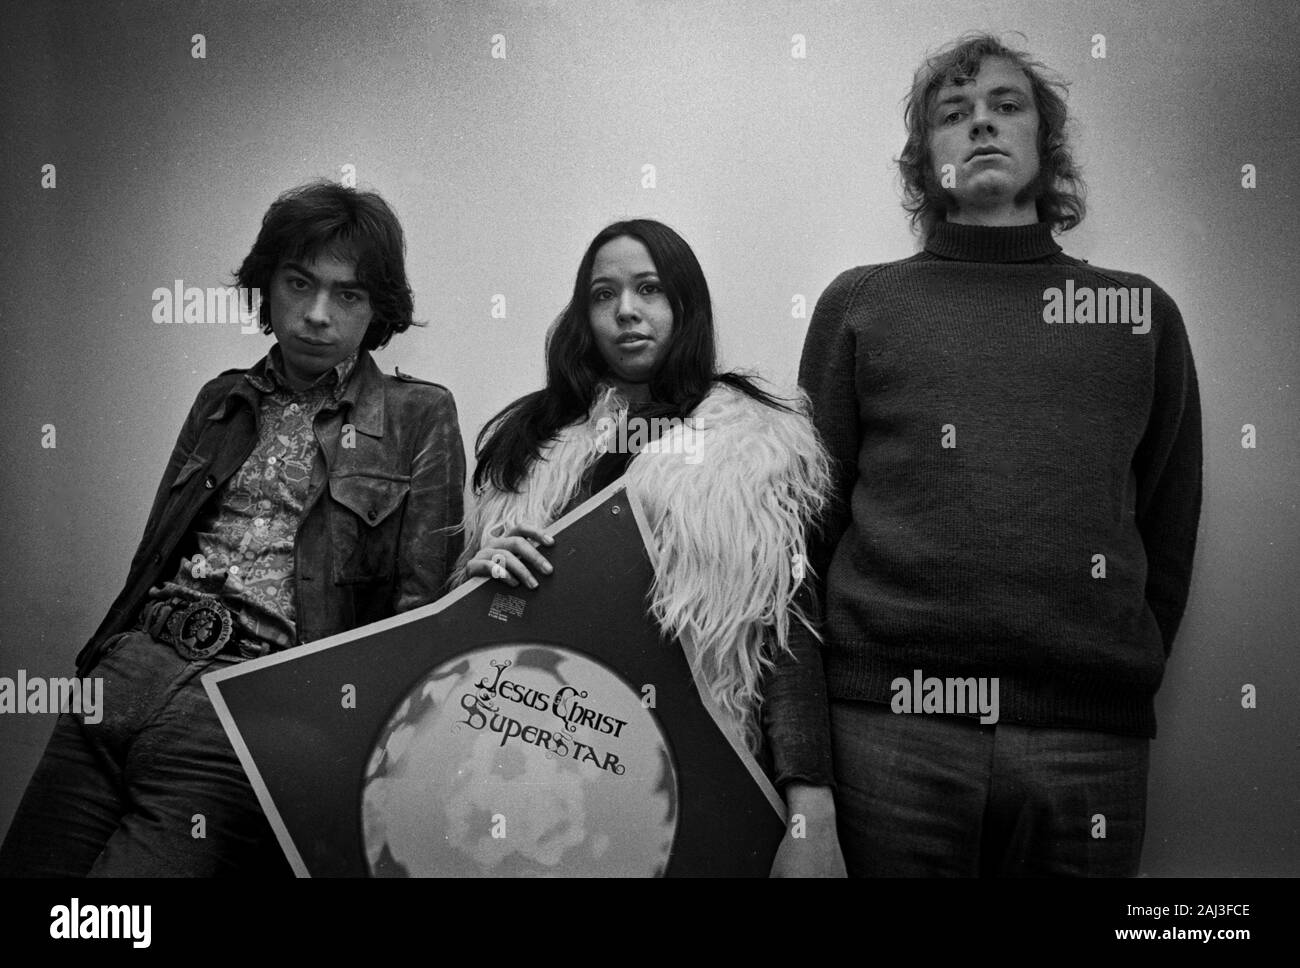 Andrew Loyd Webber, Yvonne Elliman and Tim Rice promoting Jesus Christ Superstar, London, 1970 Stock Photo